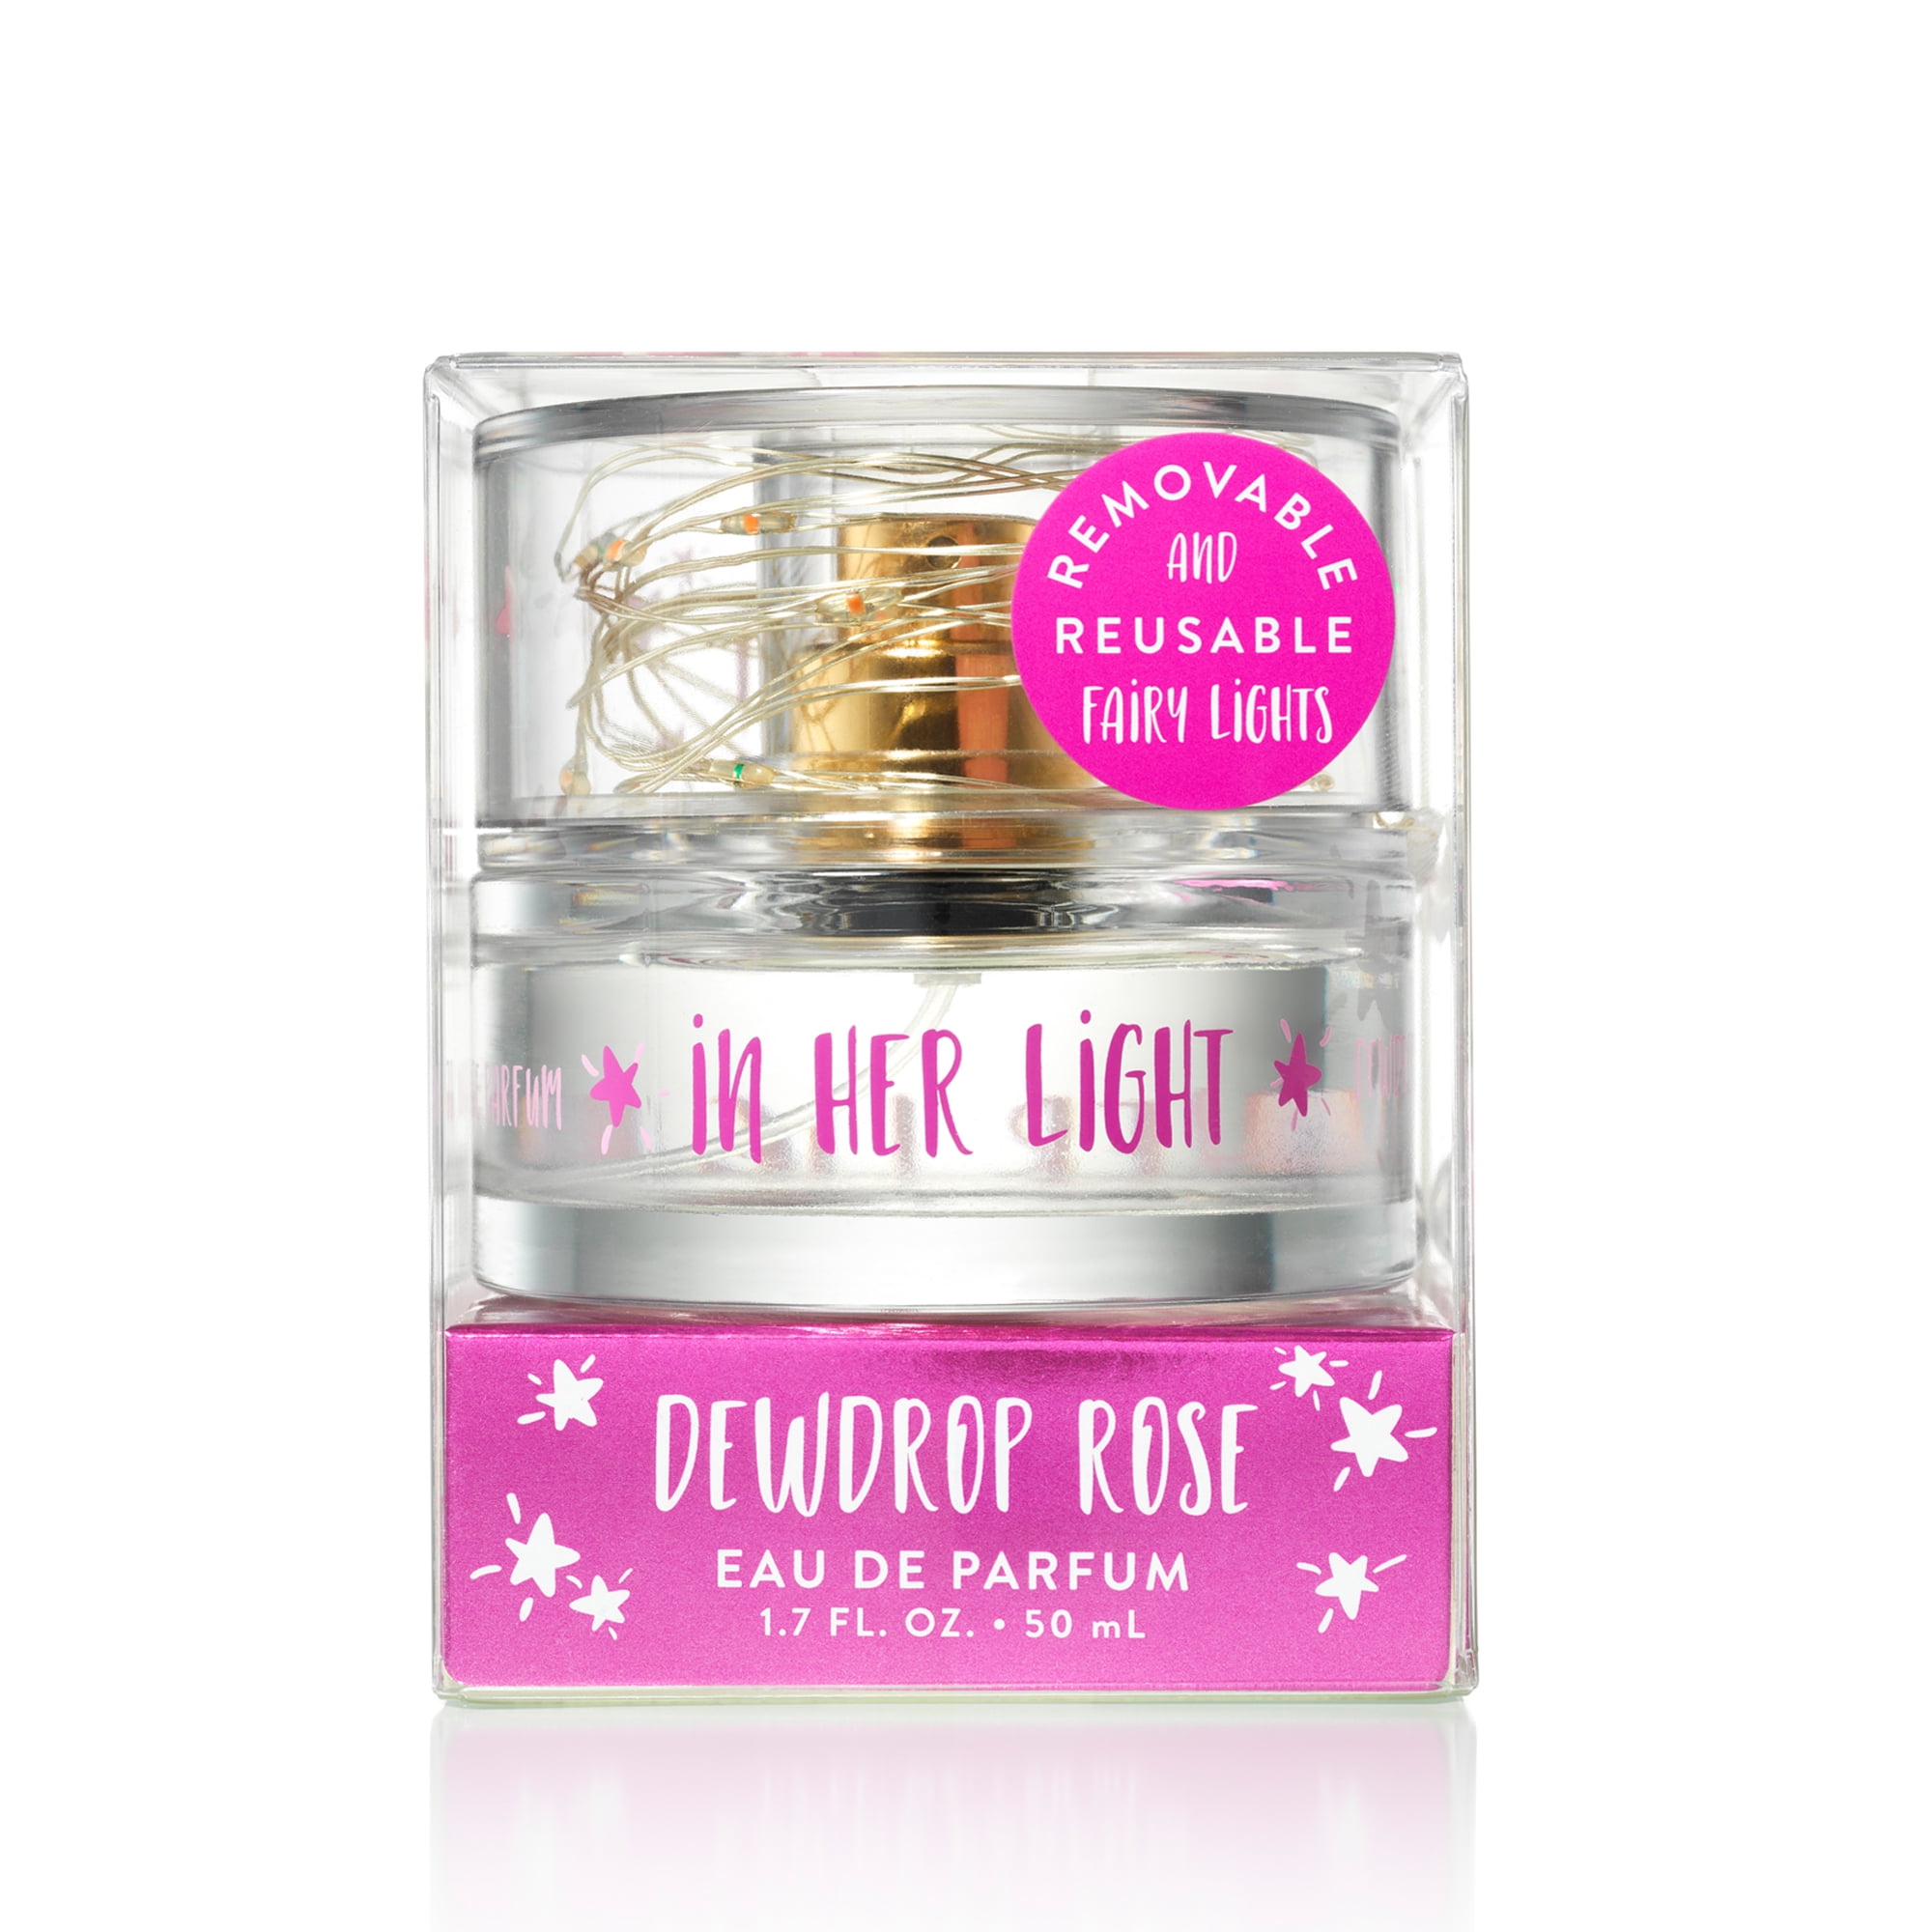 Tru Fragrance Illuminated In Her Light Perfume, Dewdrop Rose, 1.7 fl oz, 1 - Walmart.com